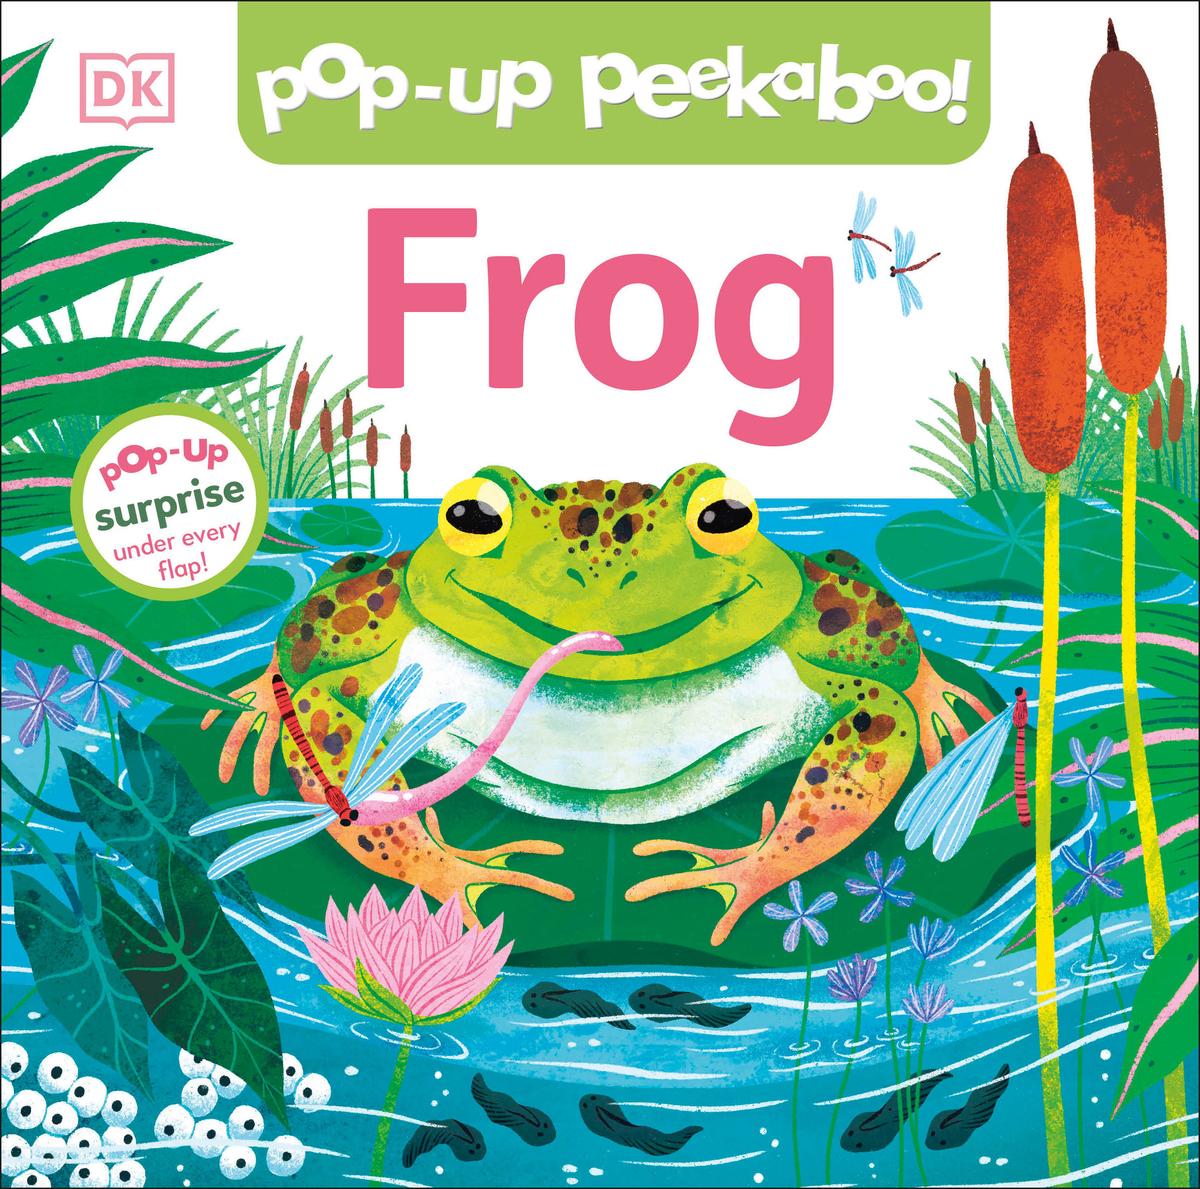 Pop-Up Peekaboo! Frog - Pop-Up Surprise Under Every Flap!